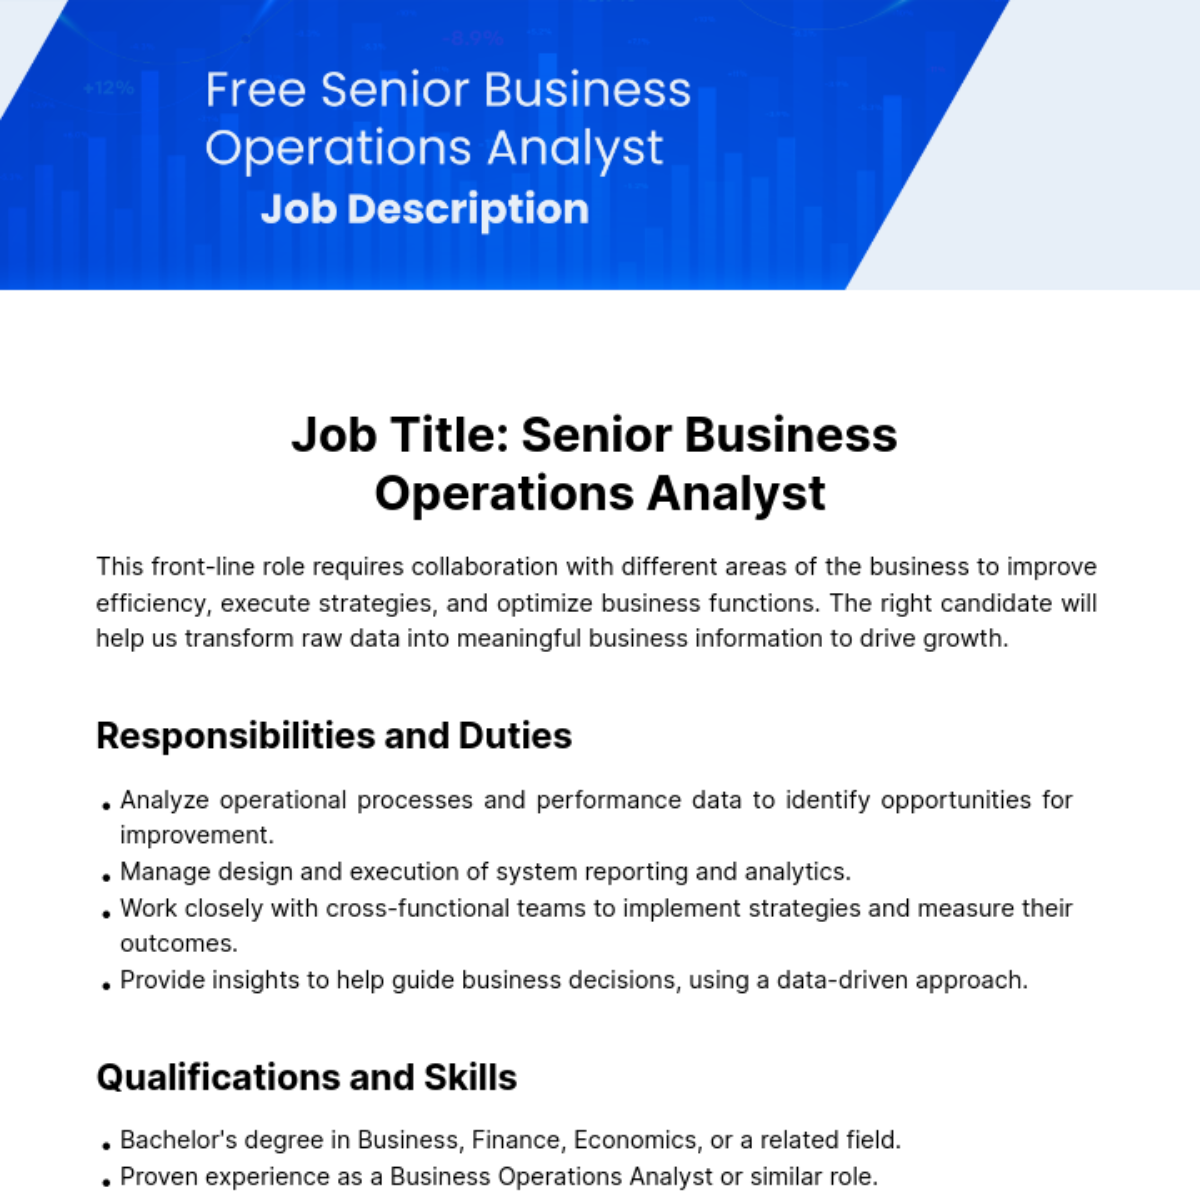 Free Senior Business Operations Analyst Job Description Template